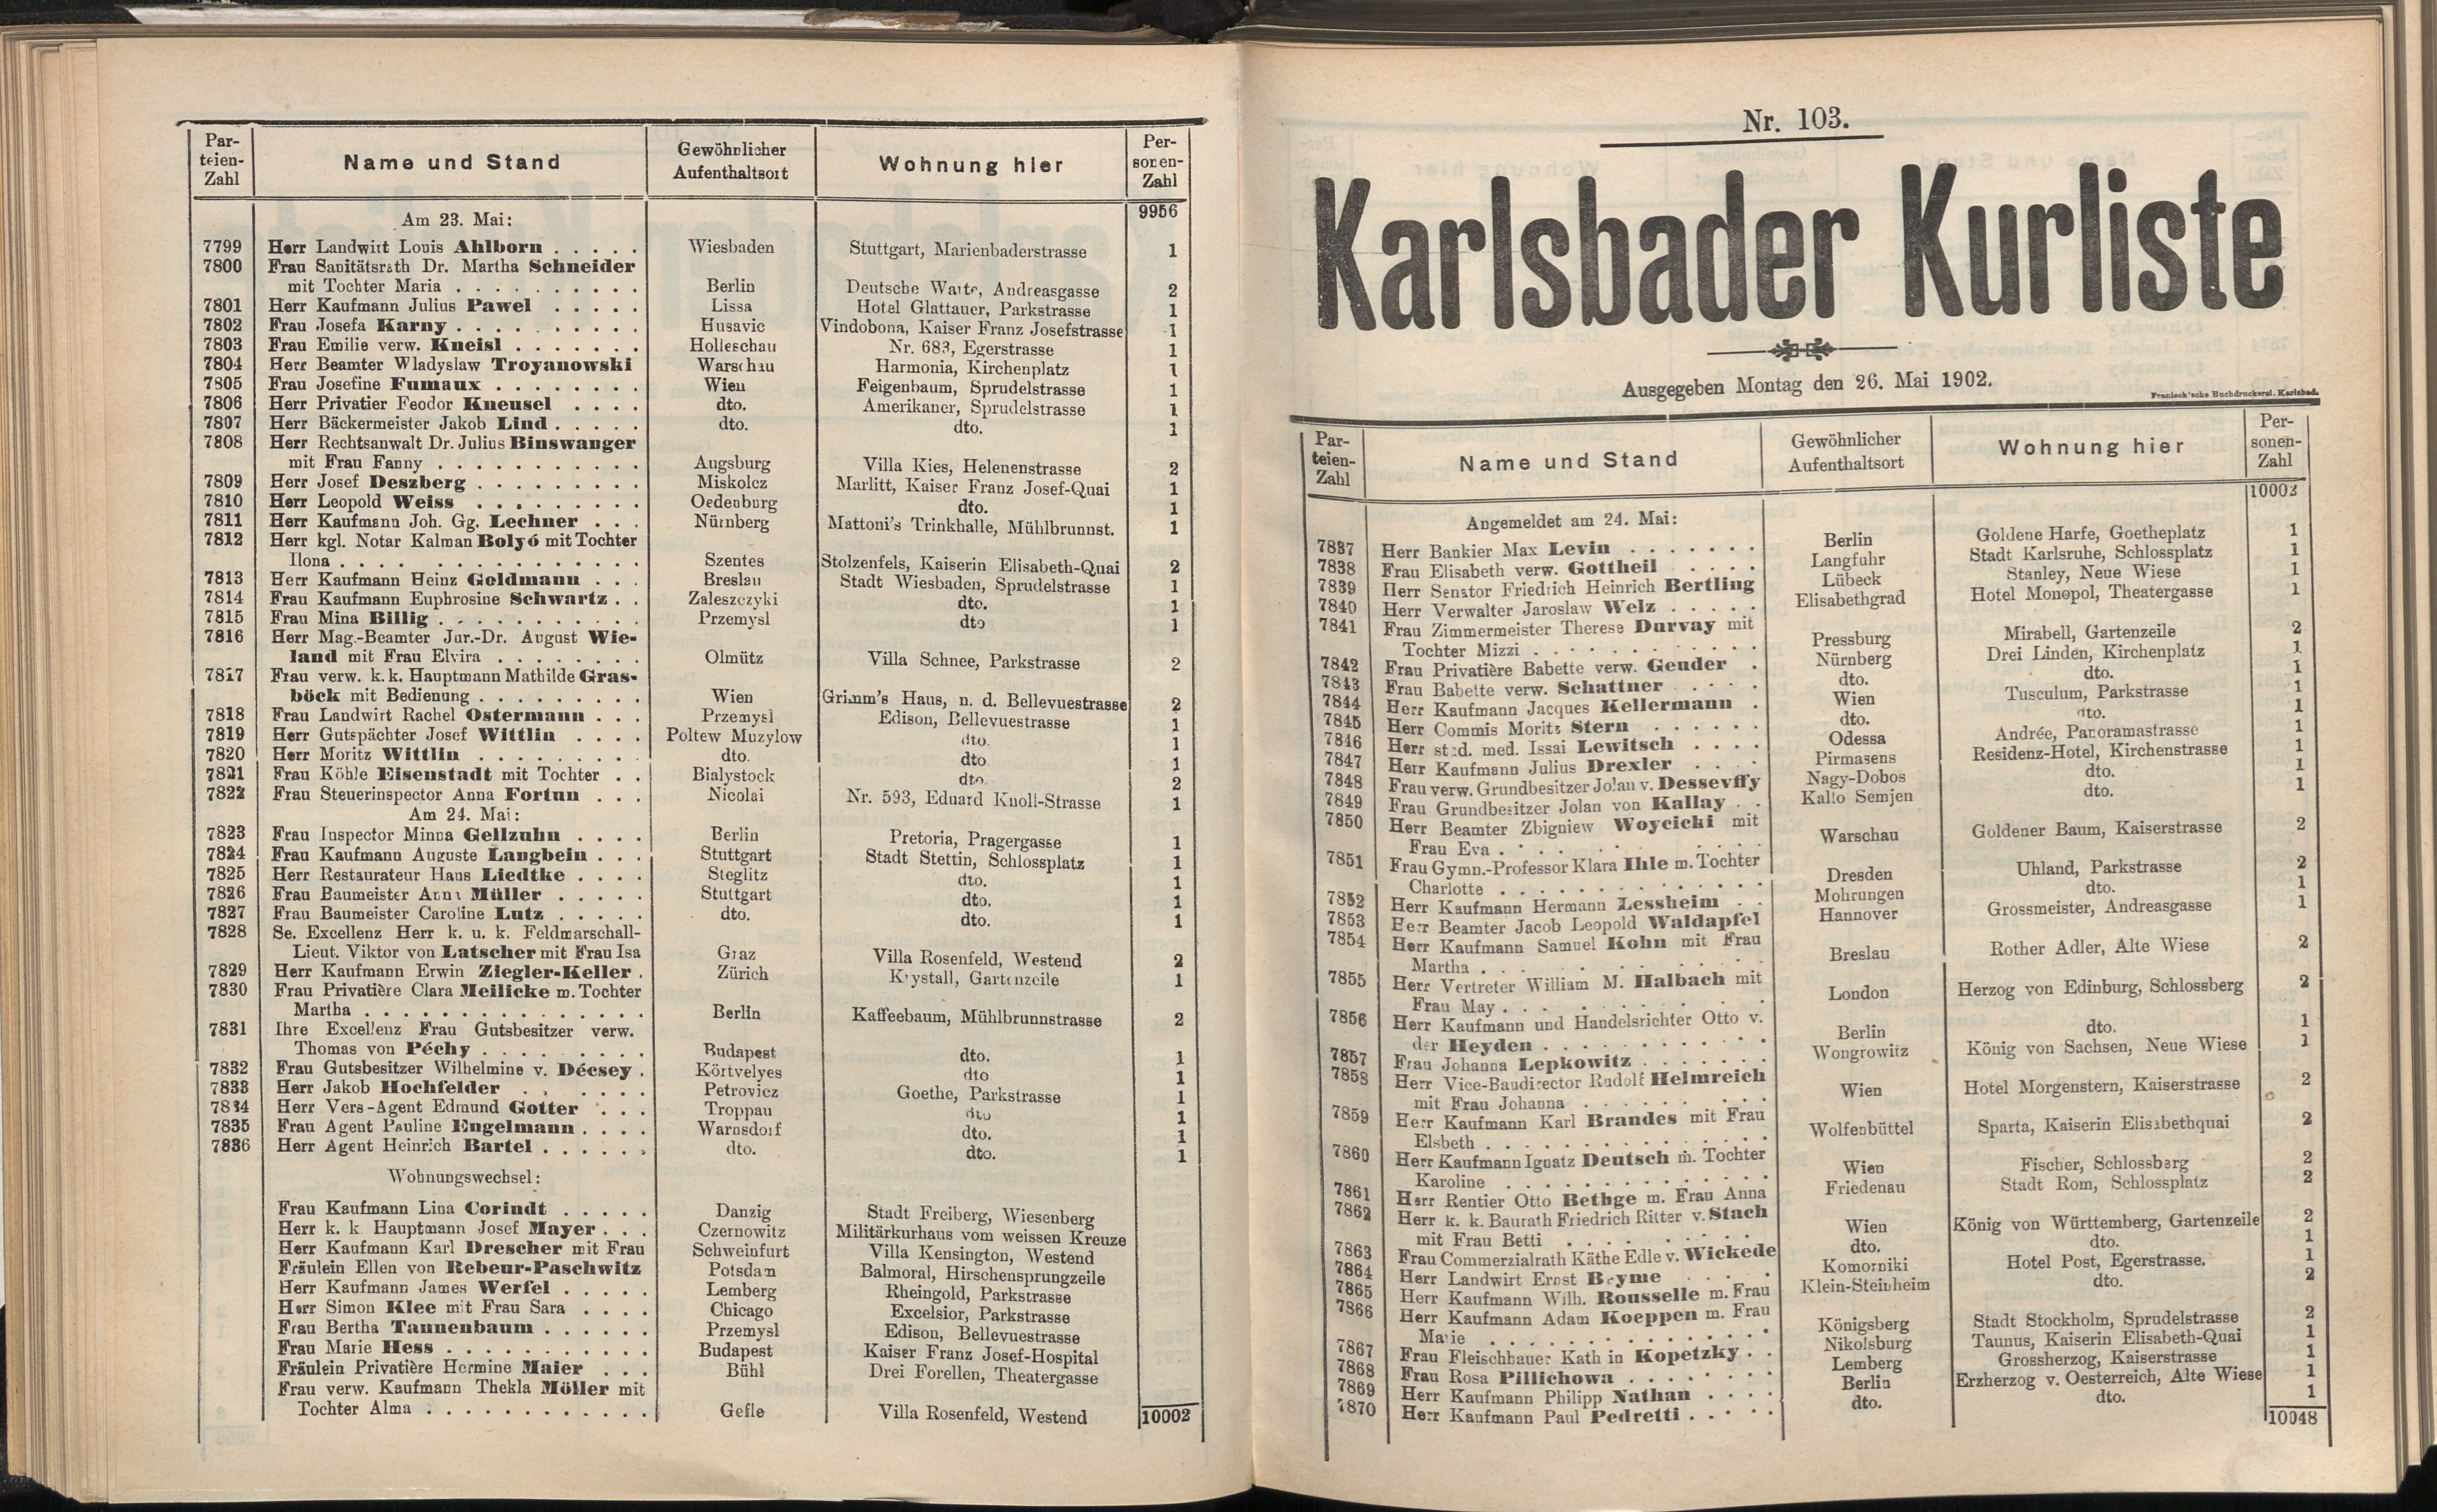 126. soap-kv_knihovna_karlsbader-kurliste-1902_1270